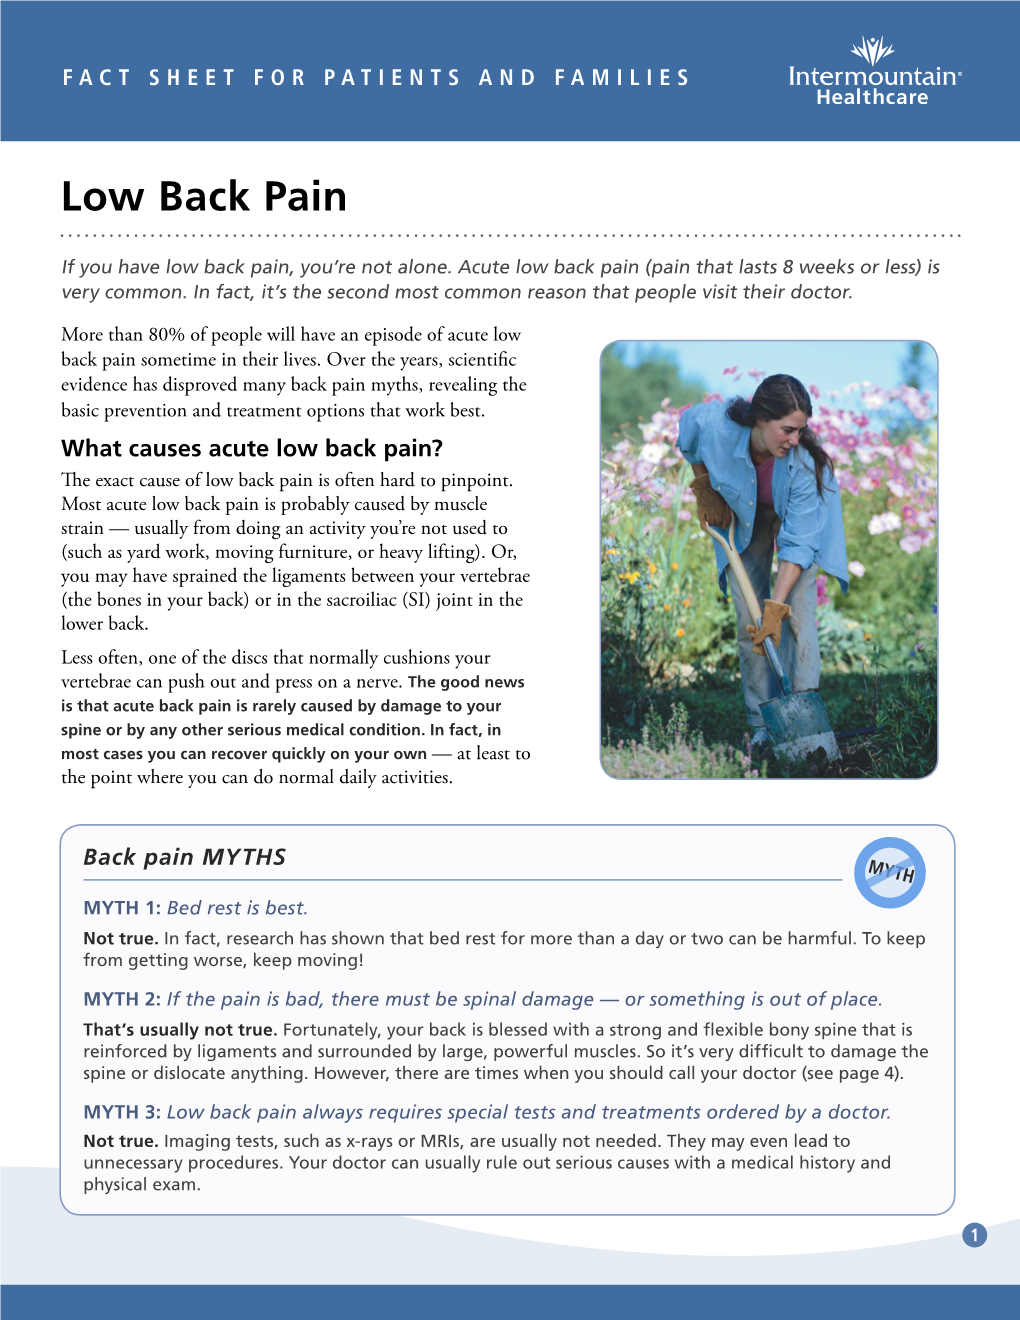 Low Back Pain Fact Sheet